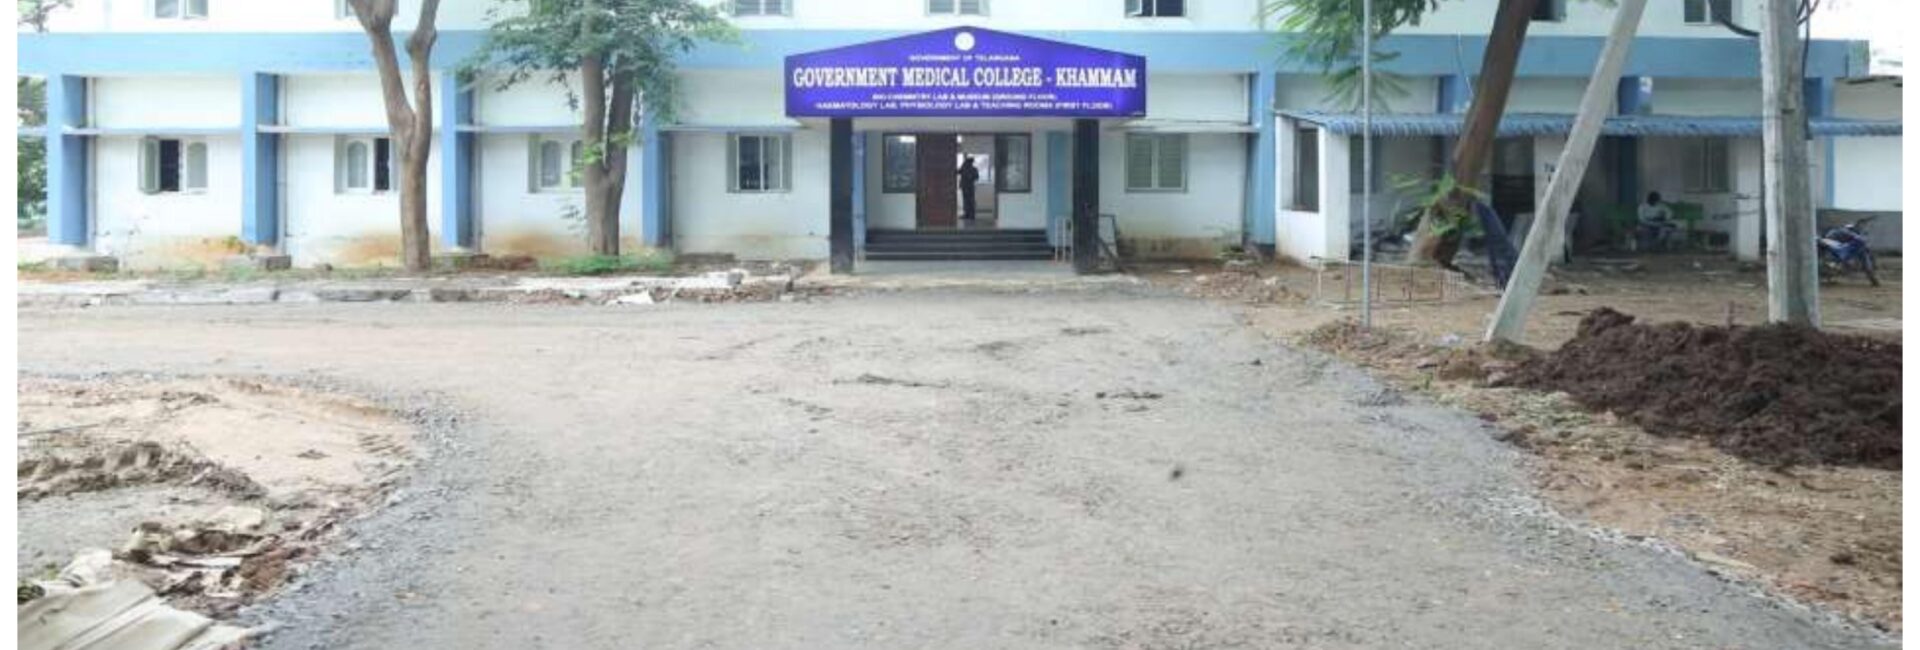 Medical college Main Entrance